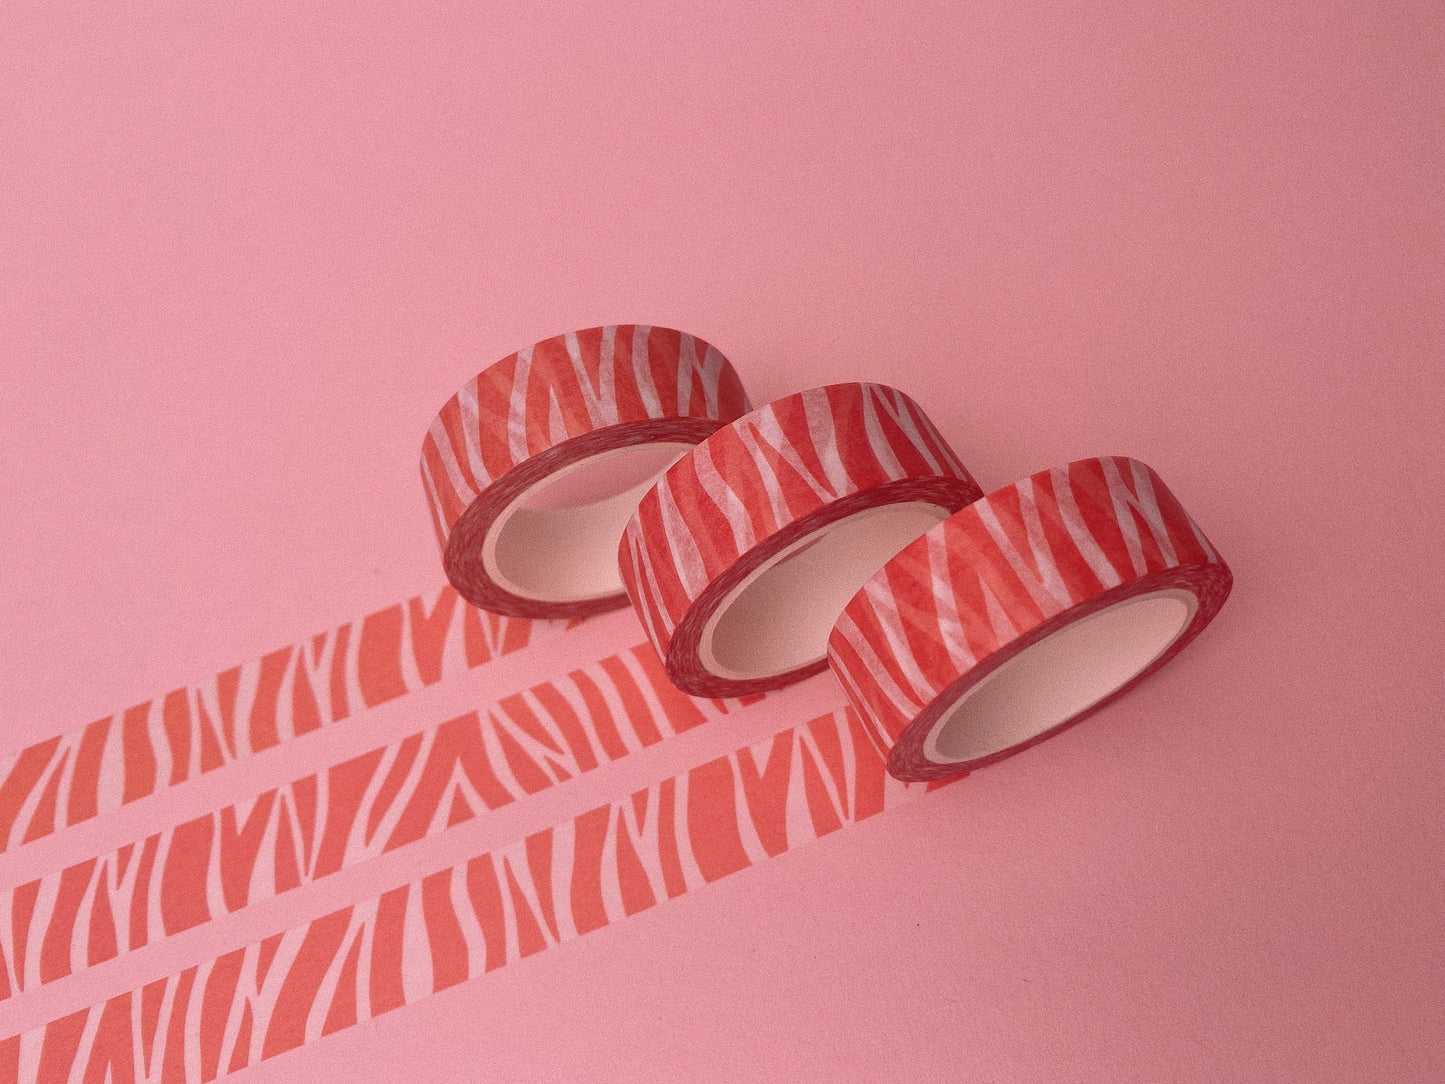 Peach Pink and White Zebra Stripes Washi Tape